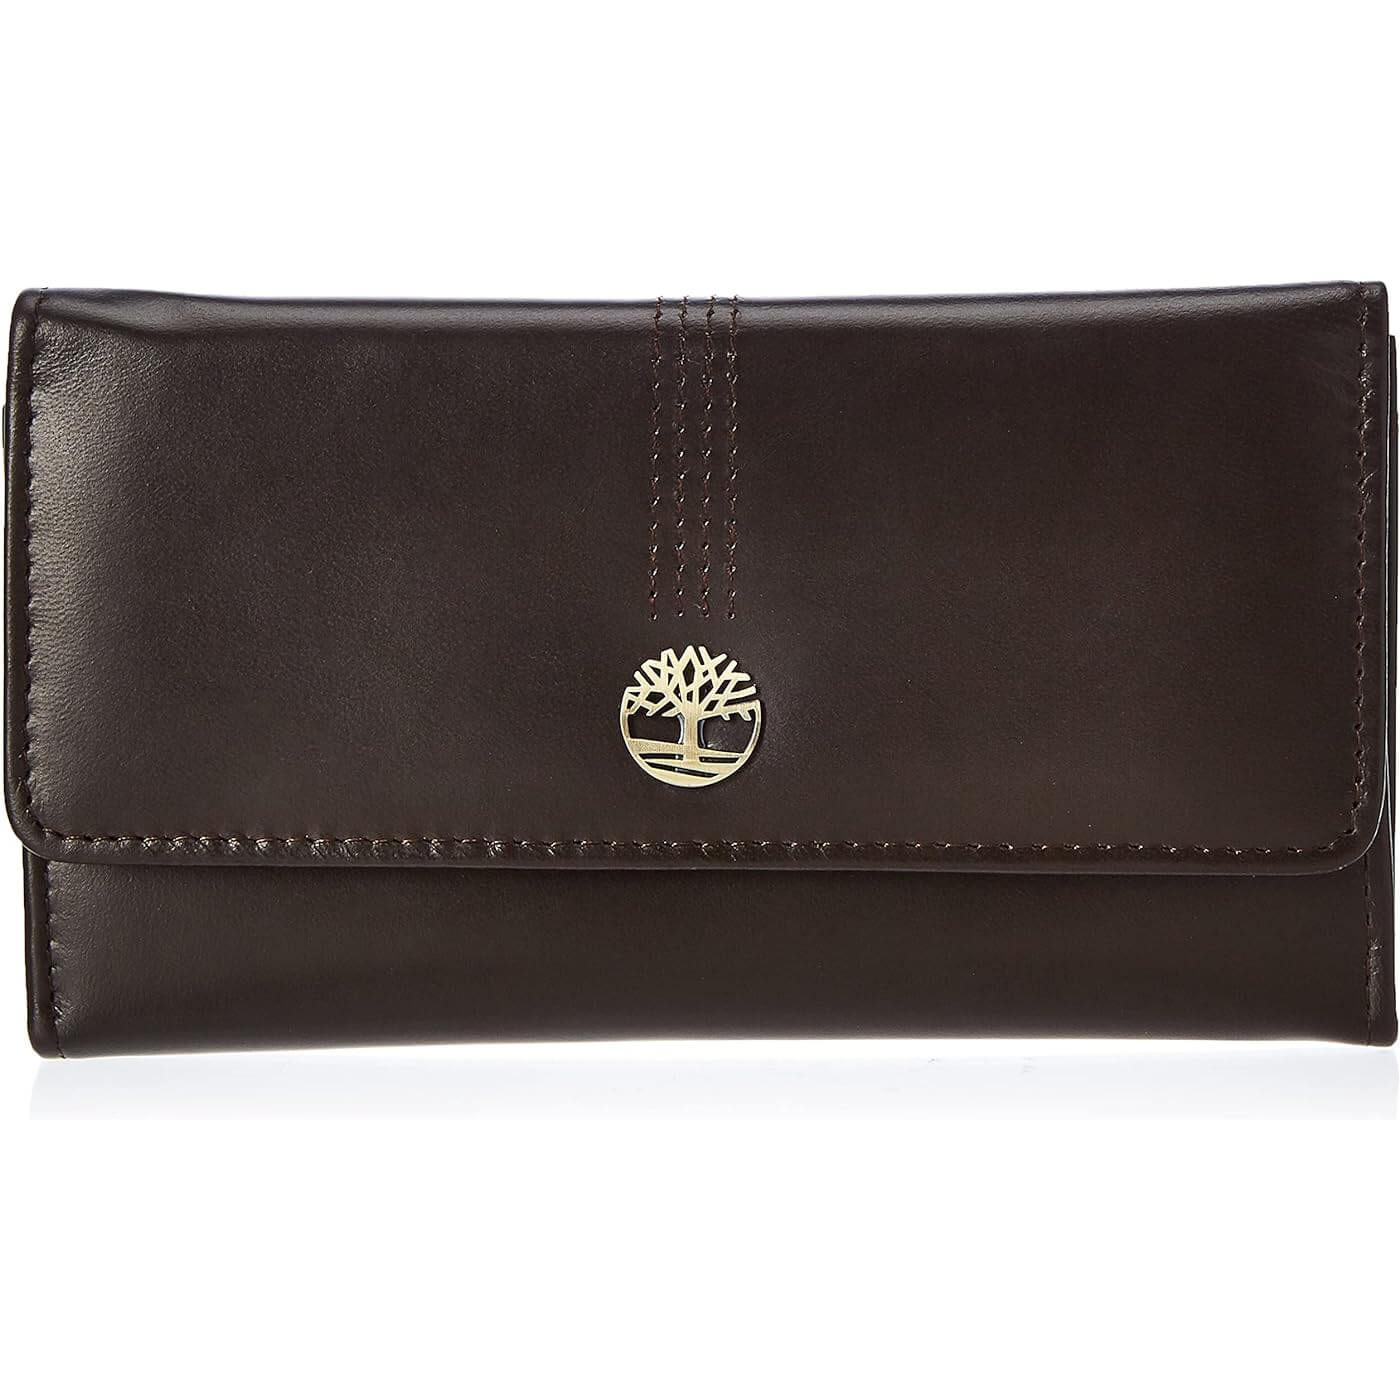 Кожаный кошелек-клатч Timberland RFID Flap Organizer, коричневый кошелек кожаный женский lison kaoberg k 9102